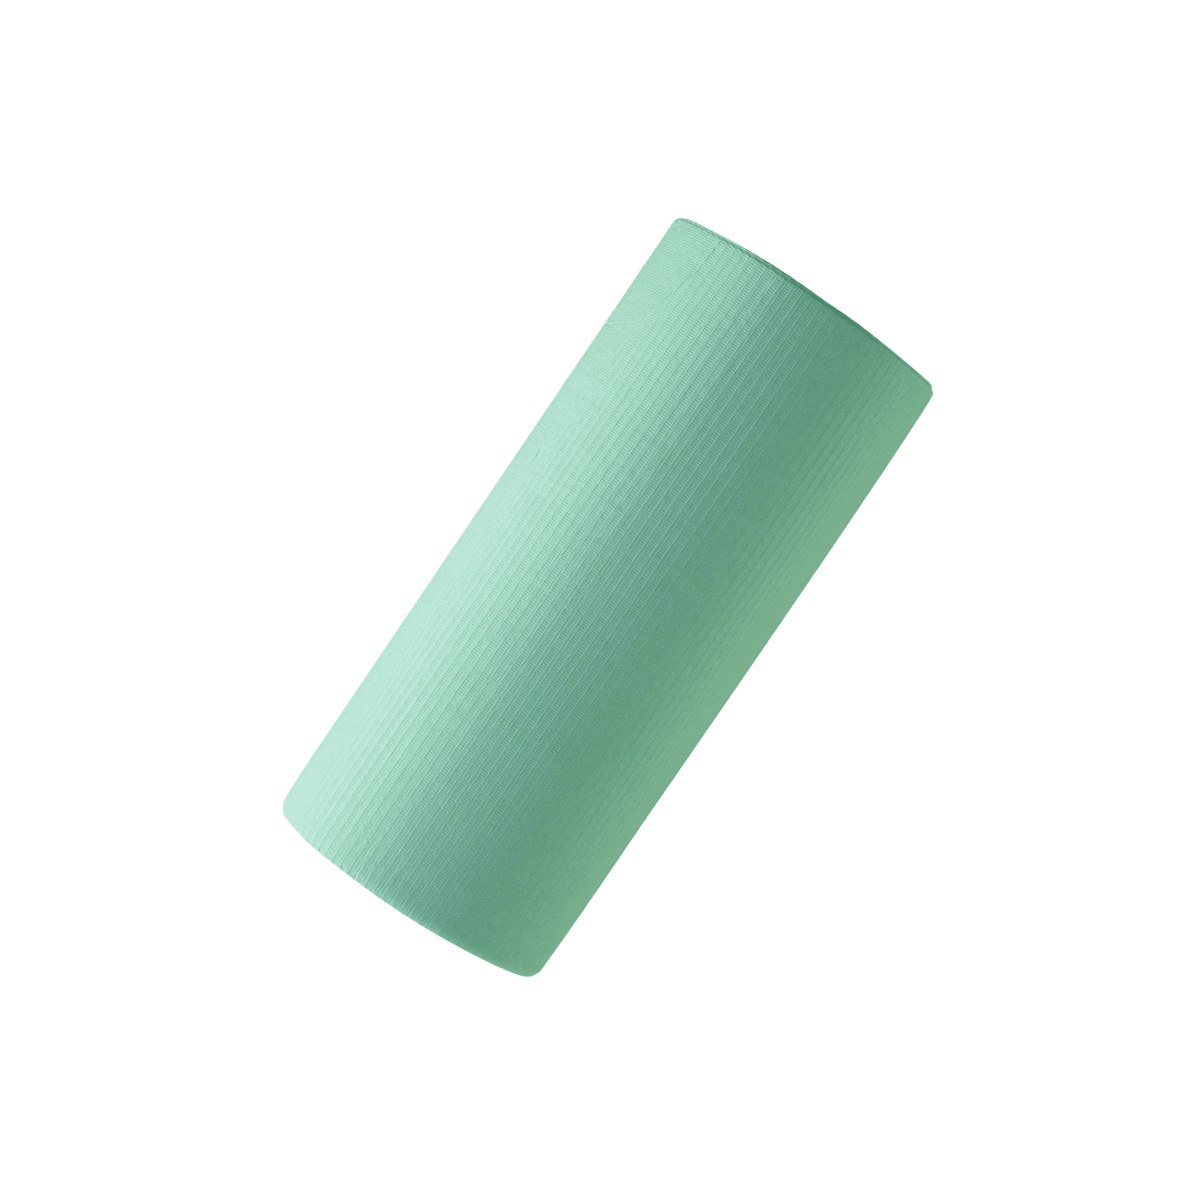 Monoart Patientenumhänge PG30 Farbe: mintgrün (Euronda)